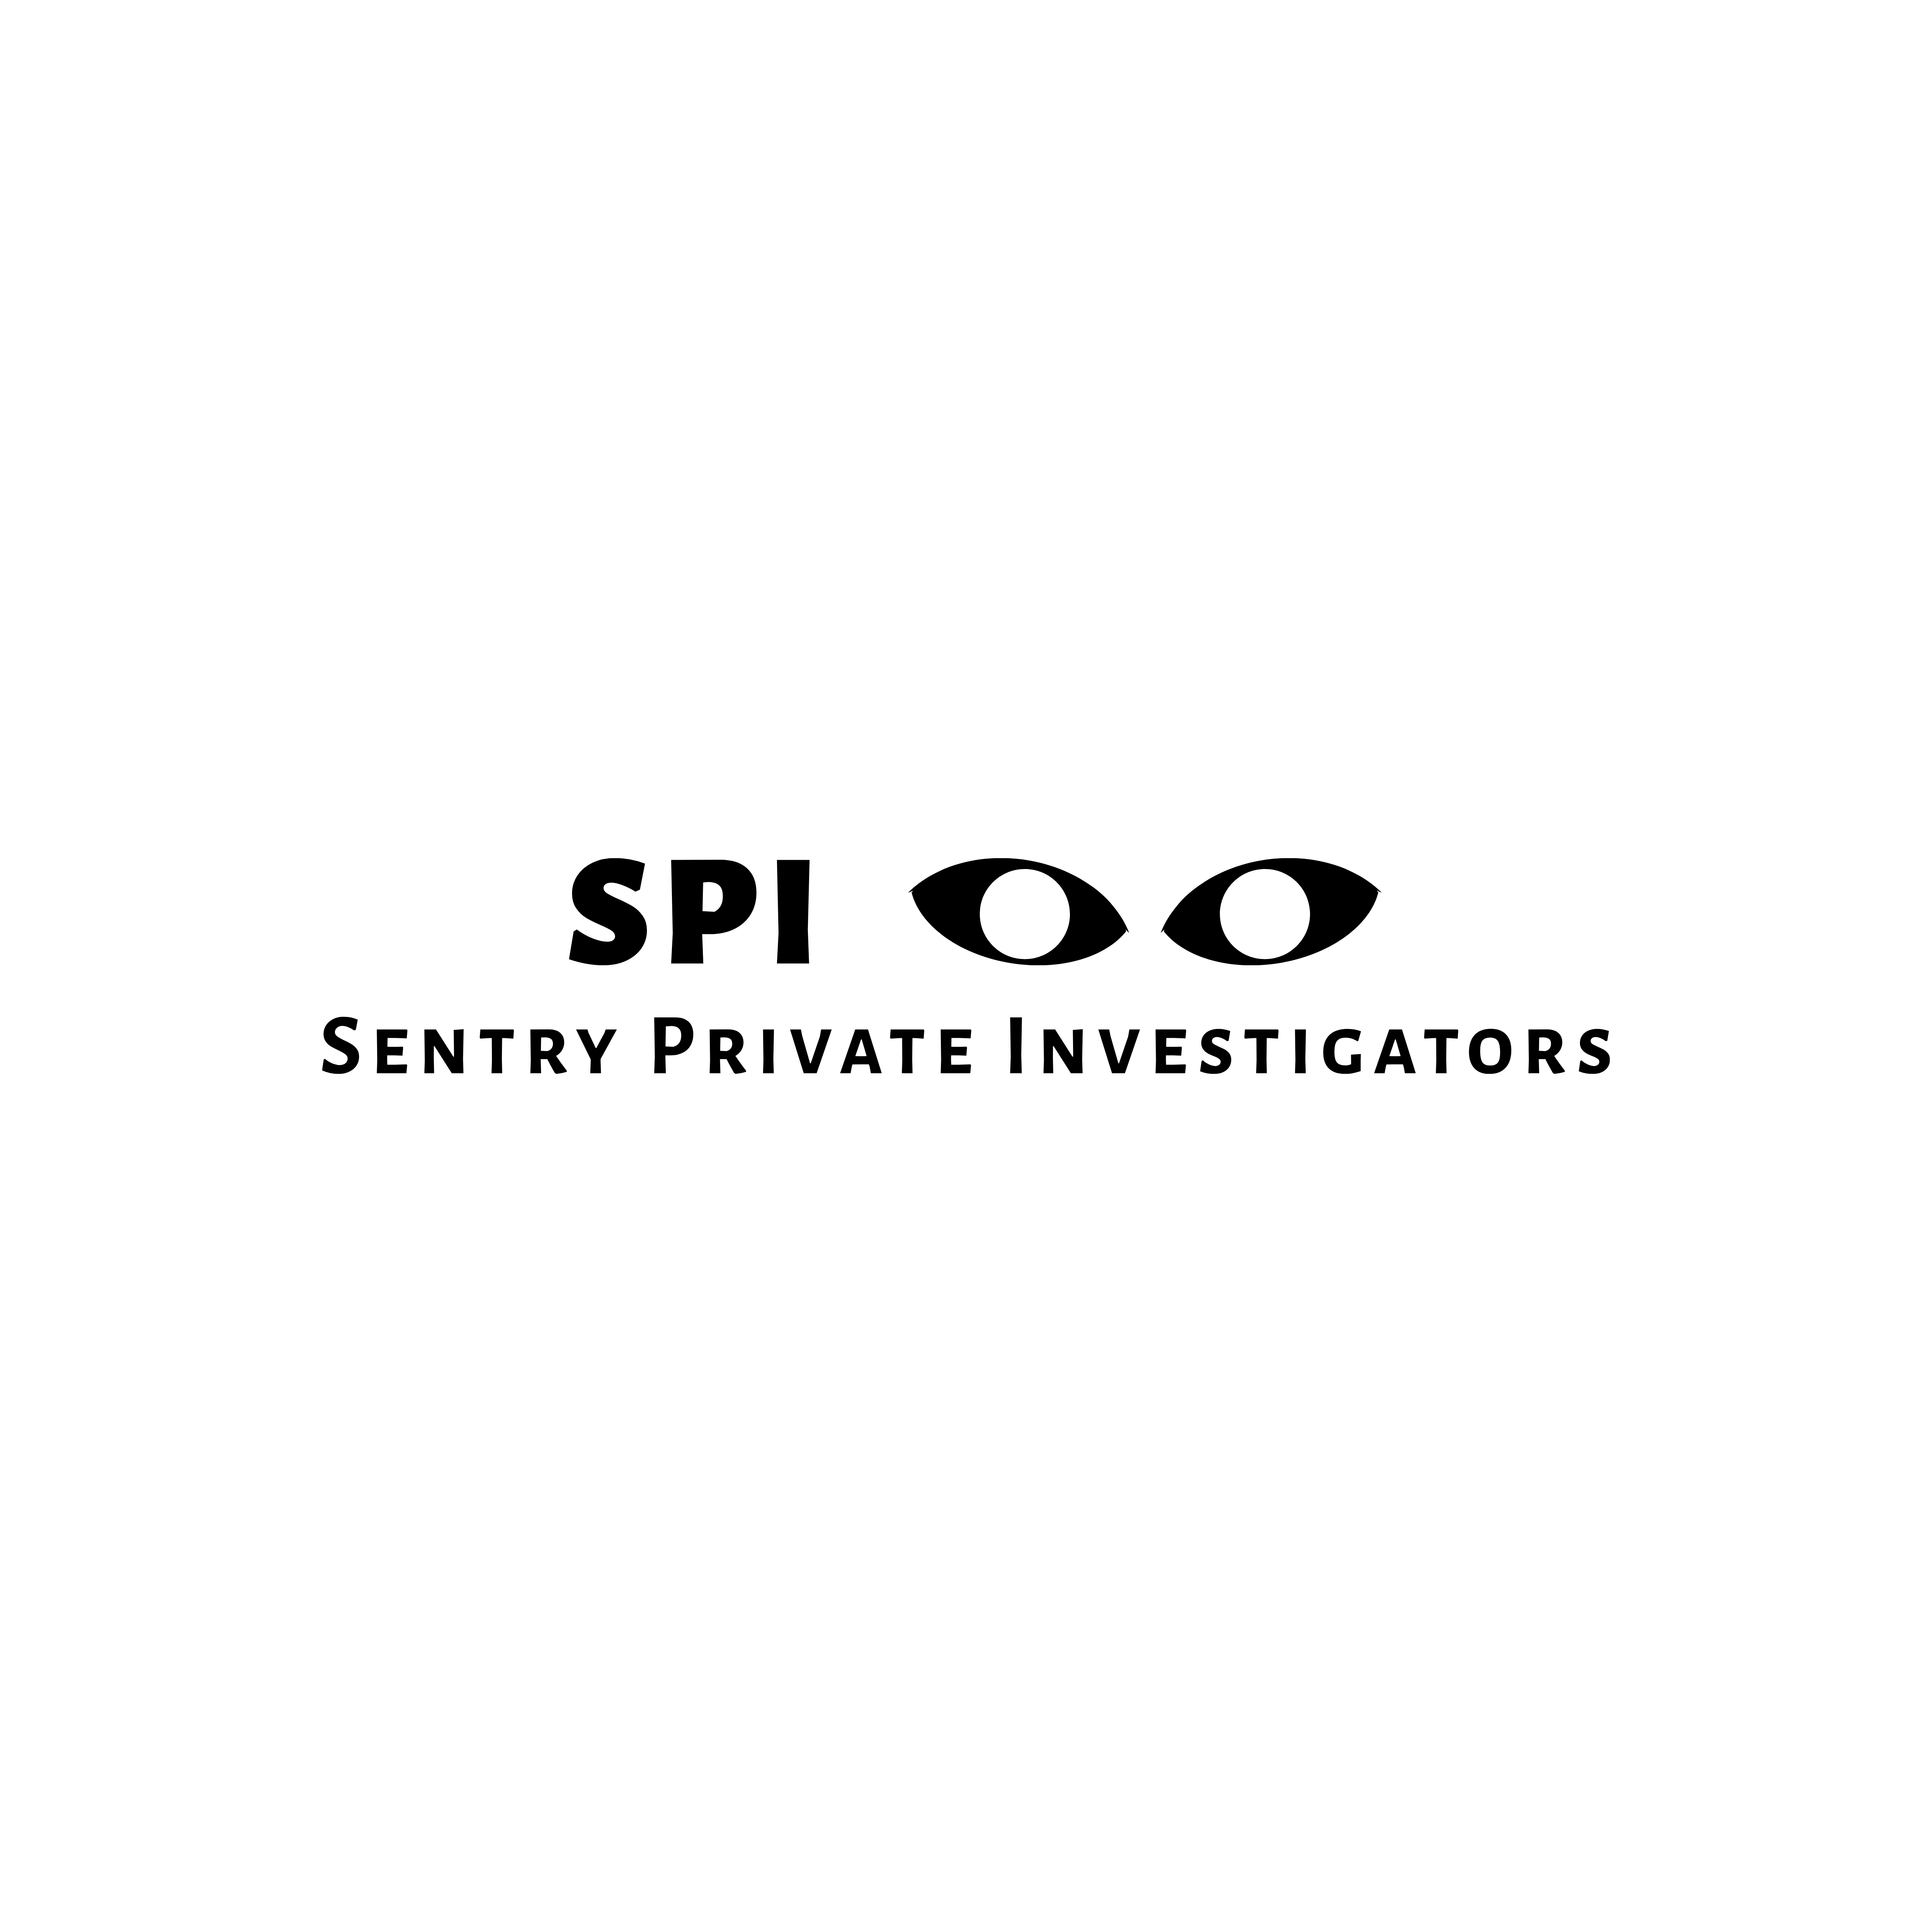 Sentry Private Investigators Ltd